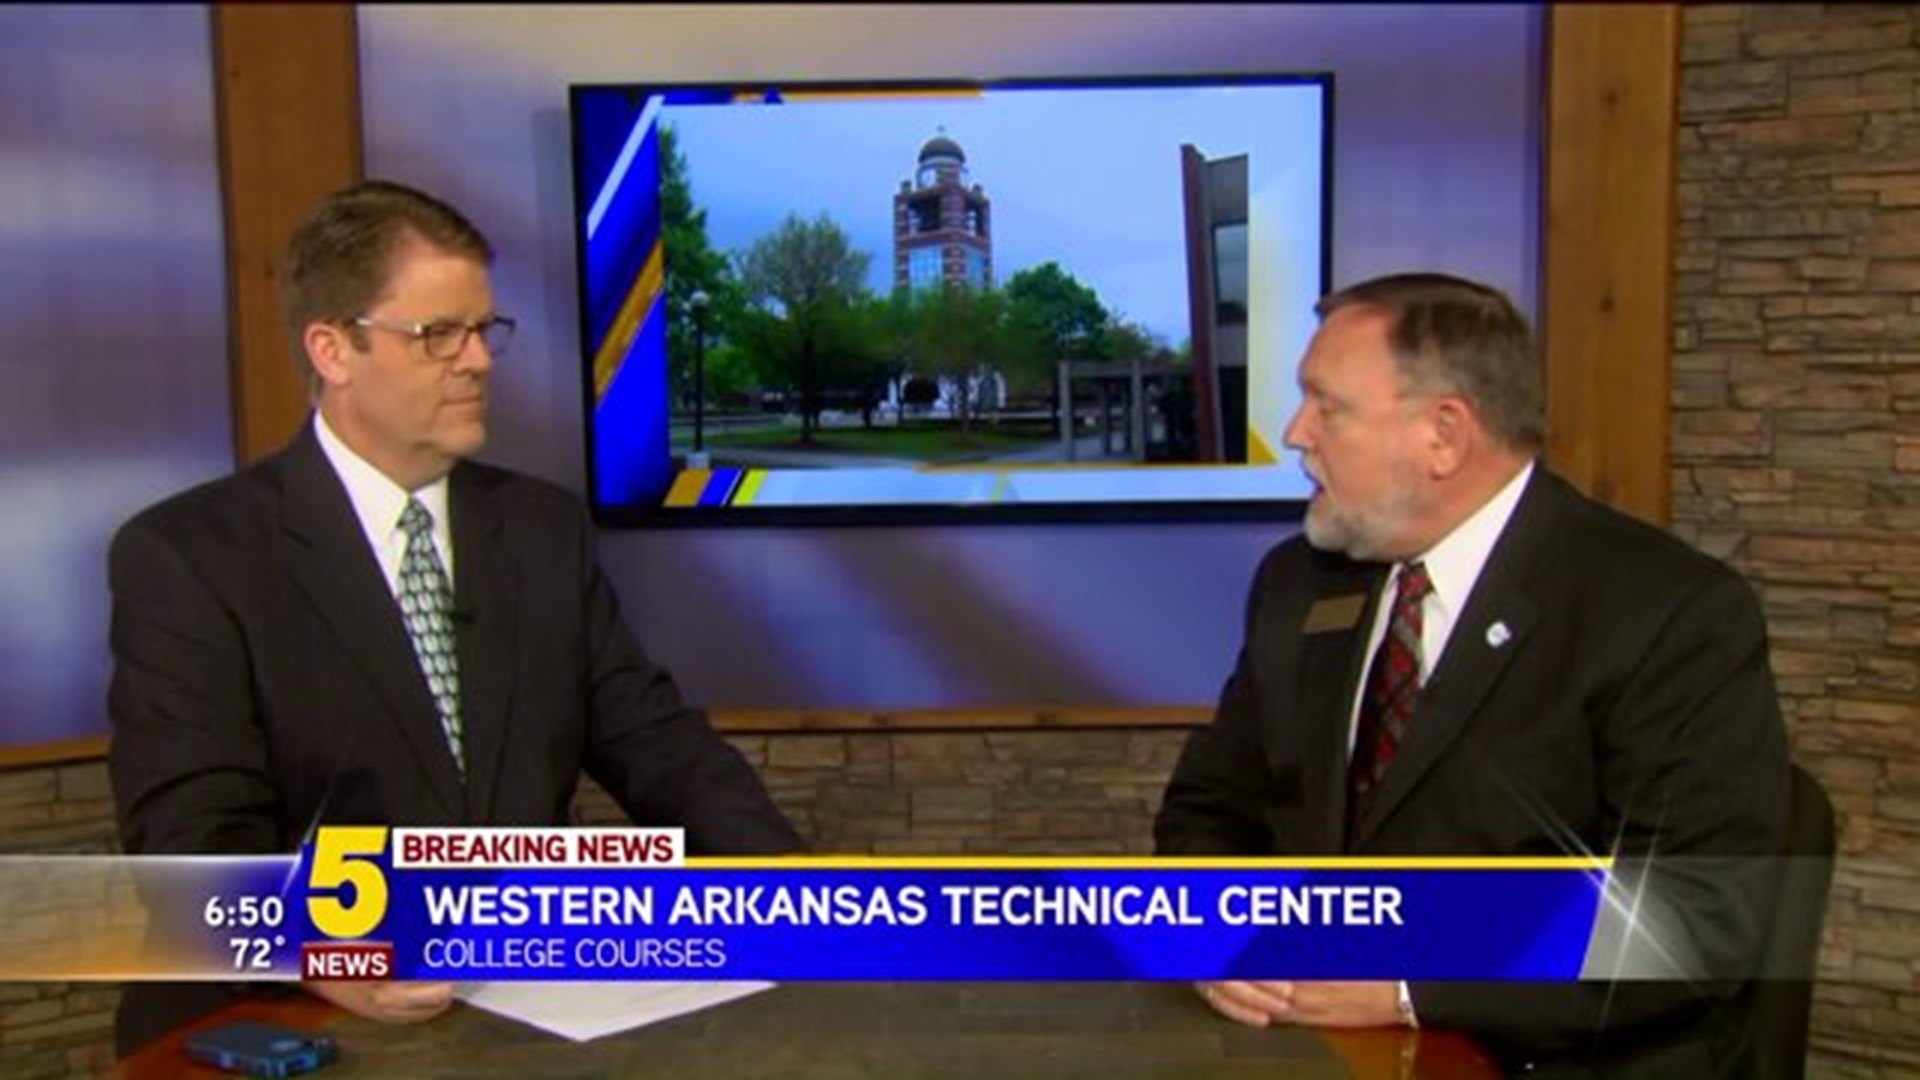 Western Arkansas Technical Center